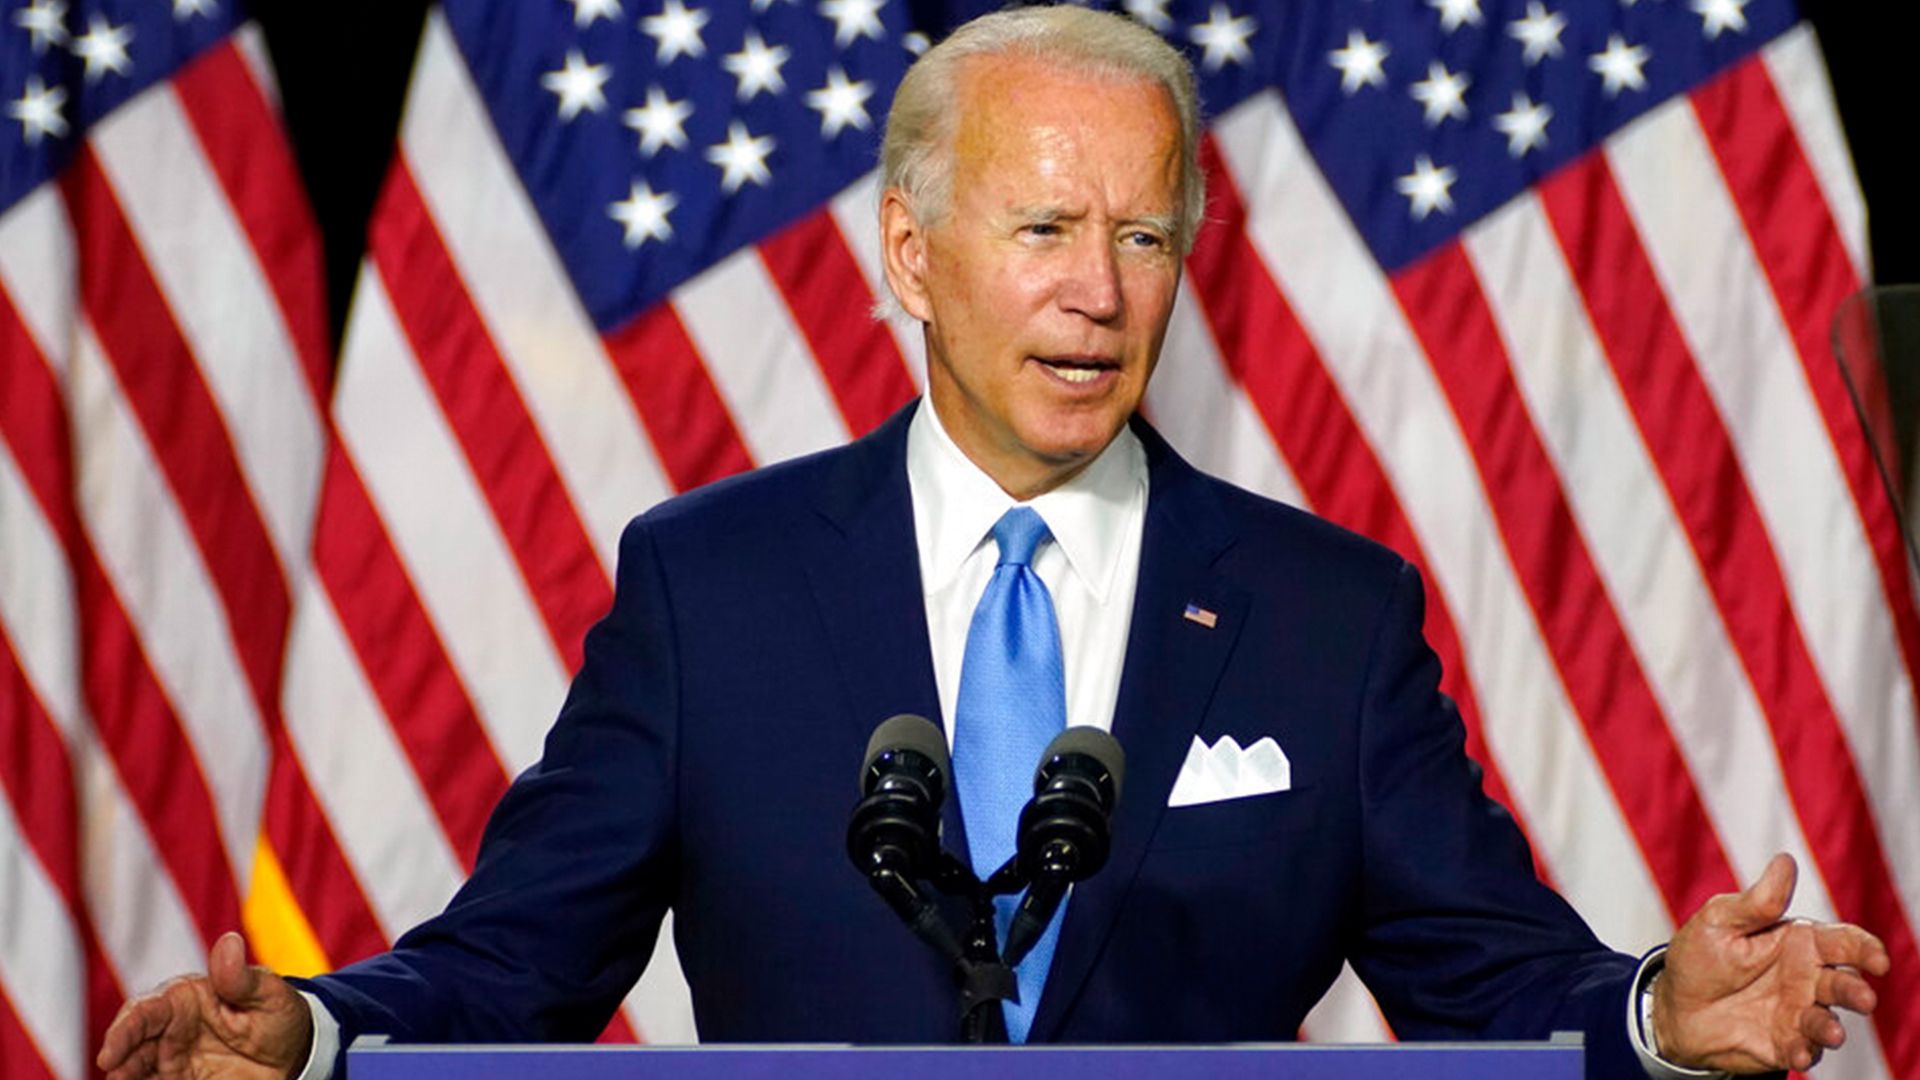 Presidential candidate profile: Joe Biden